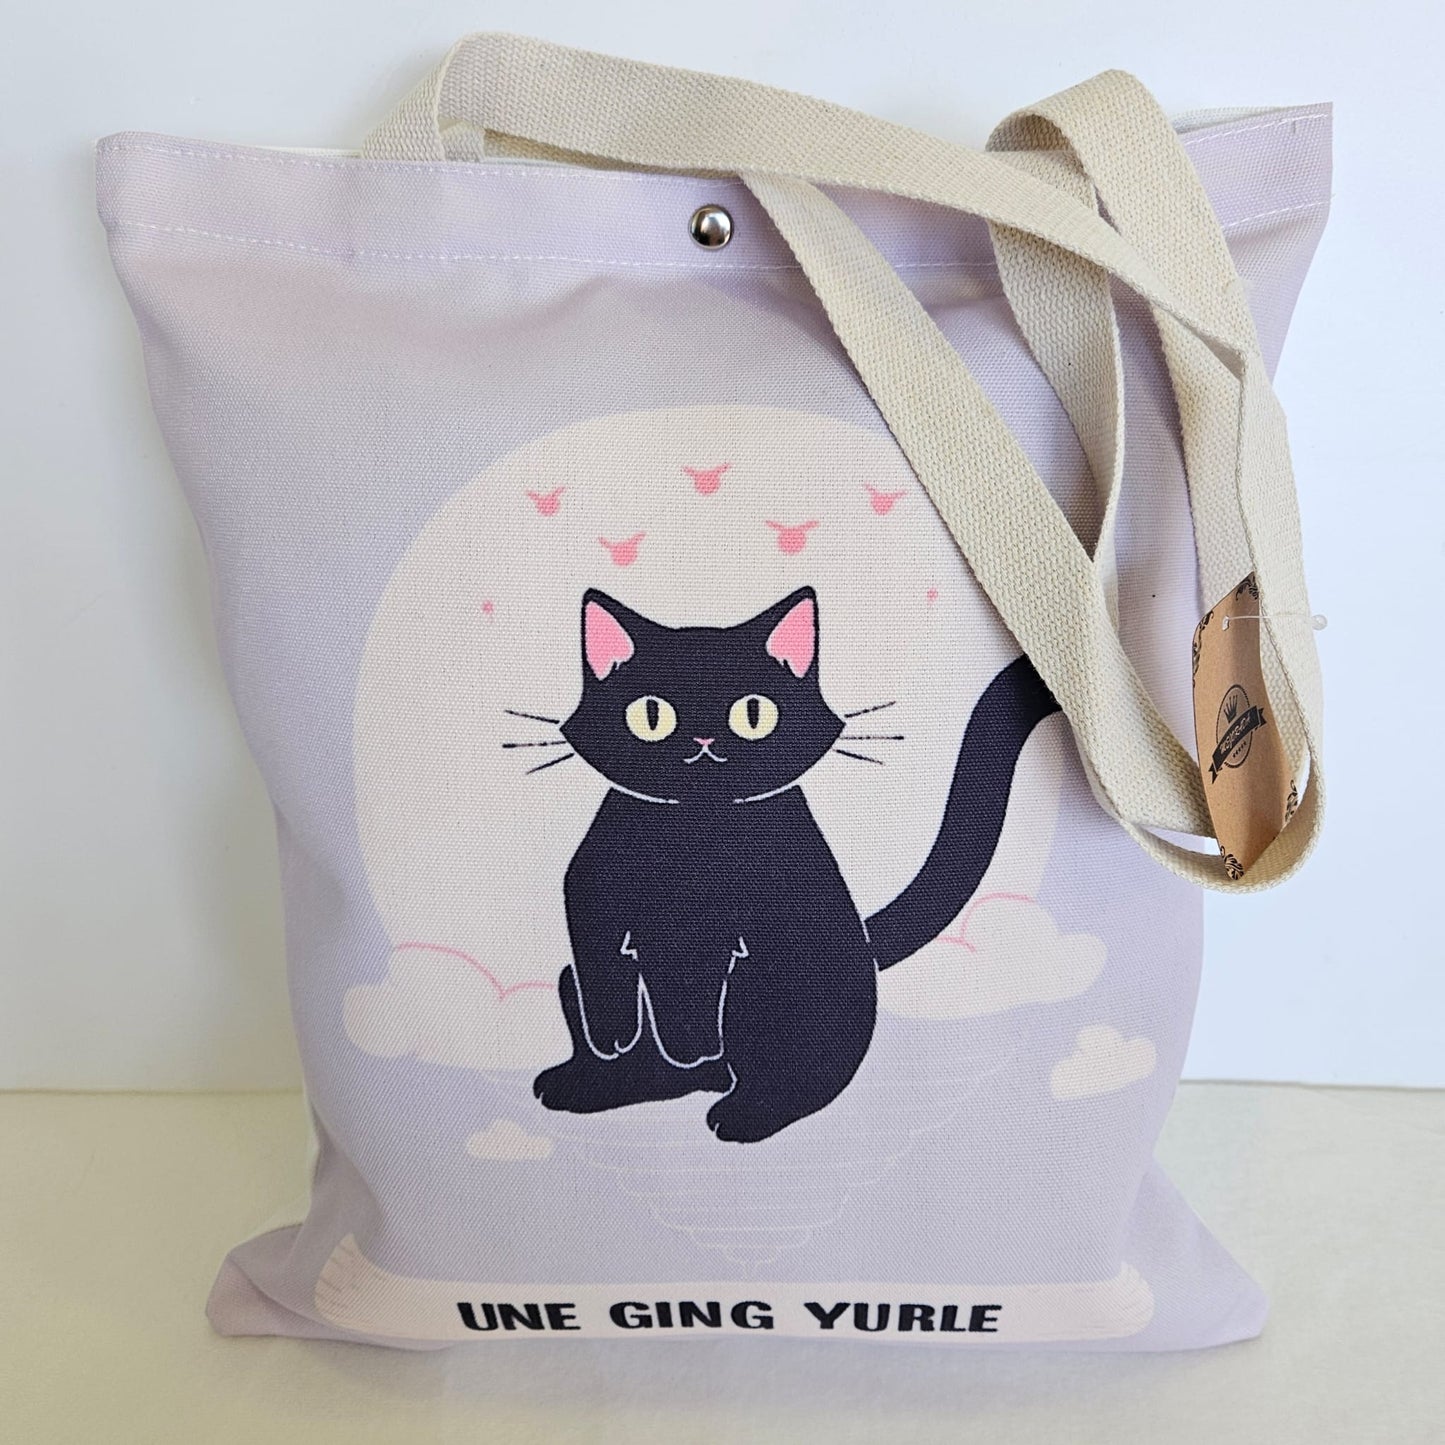 Bolsa tote bag de tela estampado gatito con frase "UNE GING YURLE"